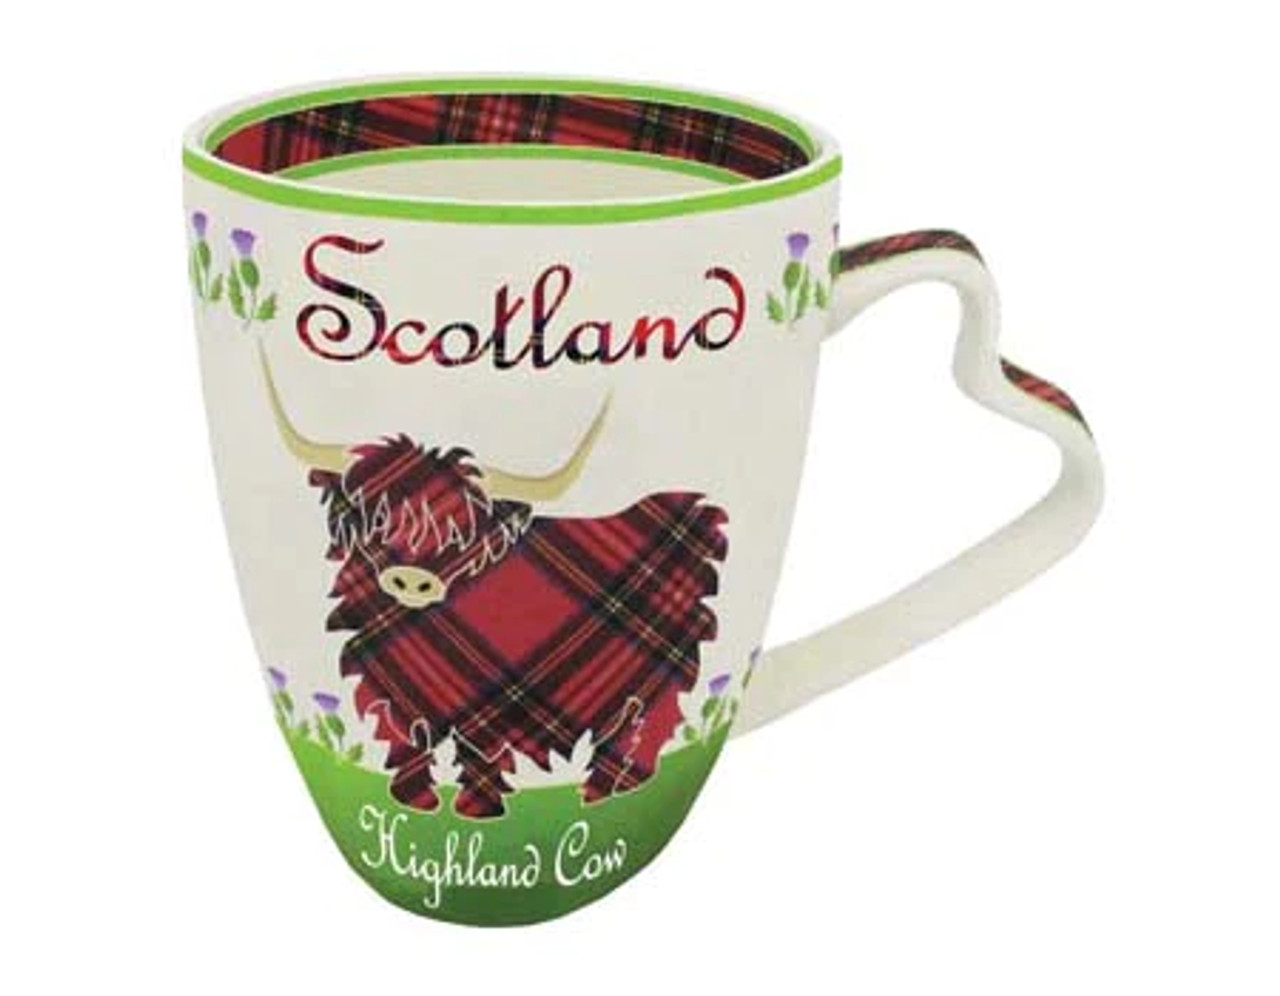 scot cow mug